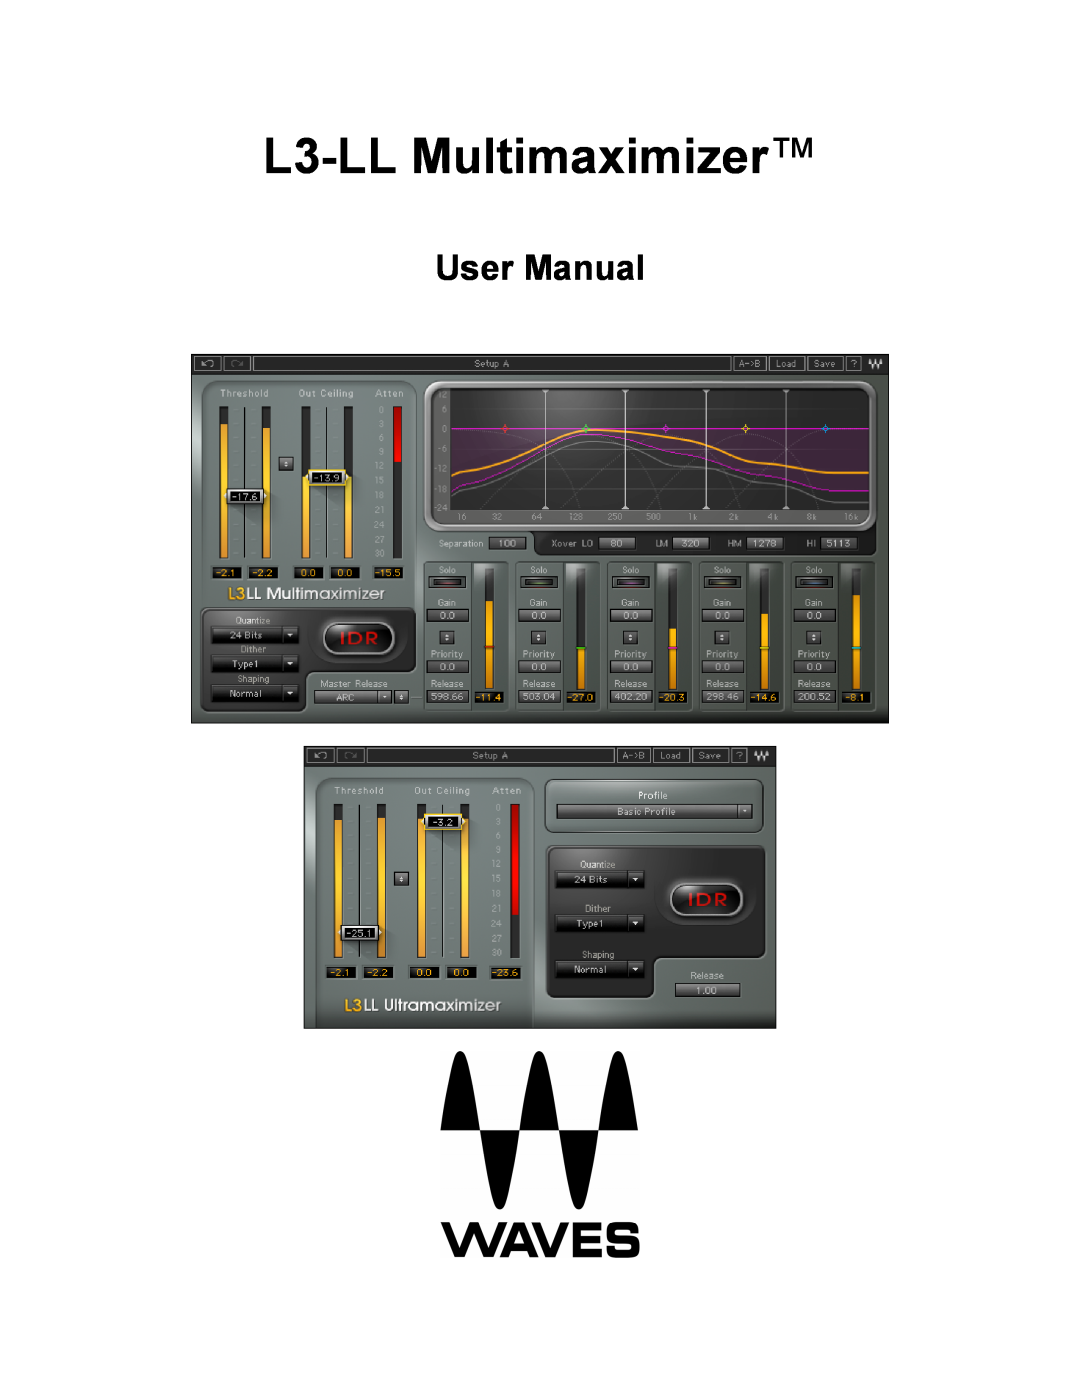 Waves user manual L3-LLMultimaximizer 